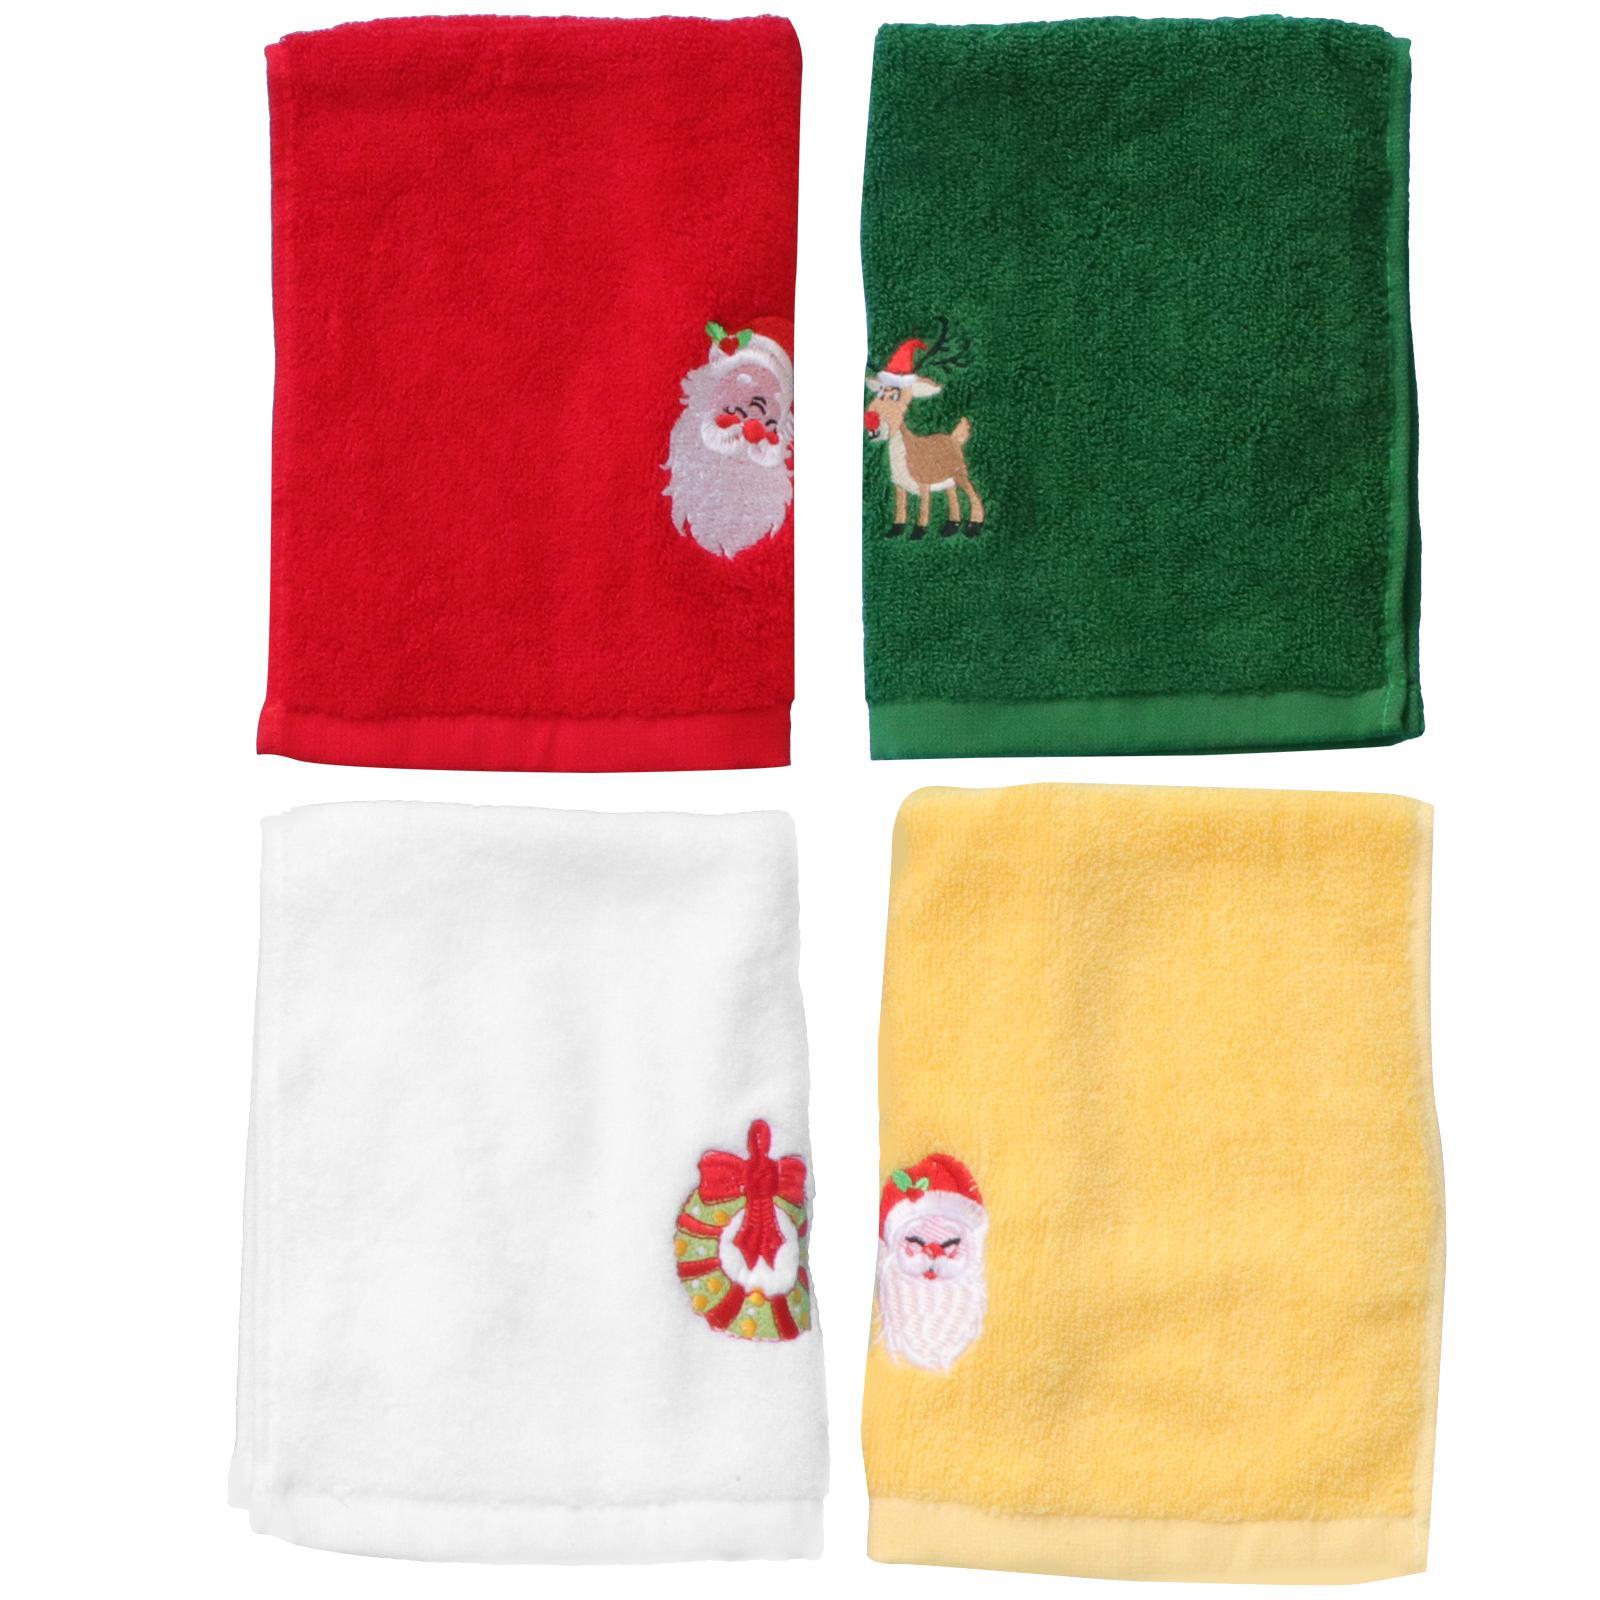 4 Pcs Lovely Towel Face Towel Decorative Towel Facial Cartoon Towel Party Creative Towel Facial Cleaning Towel